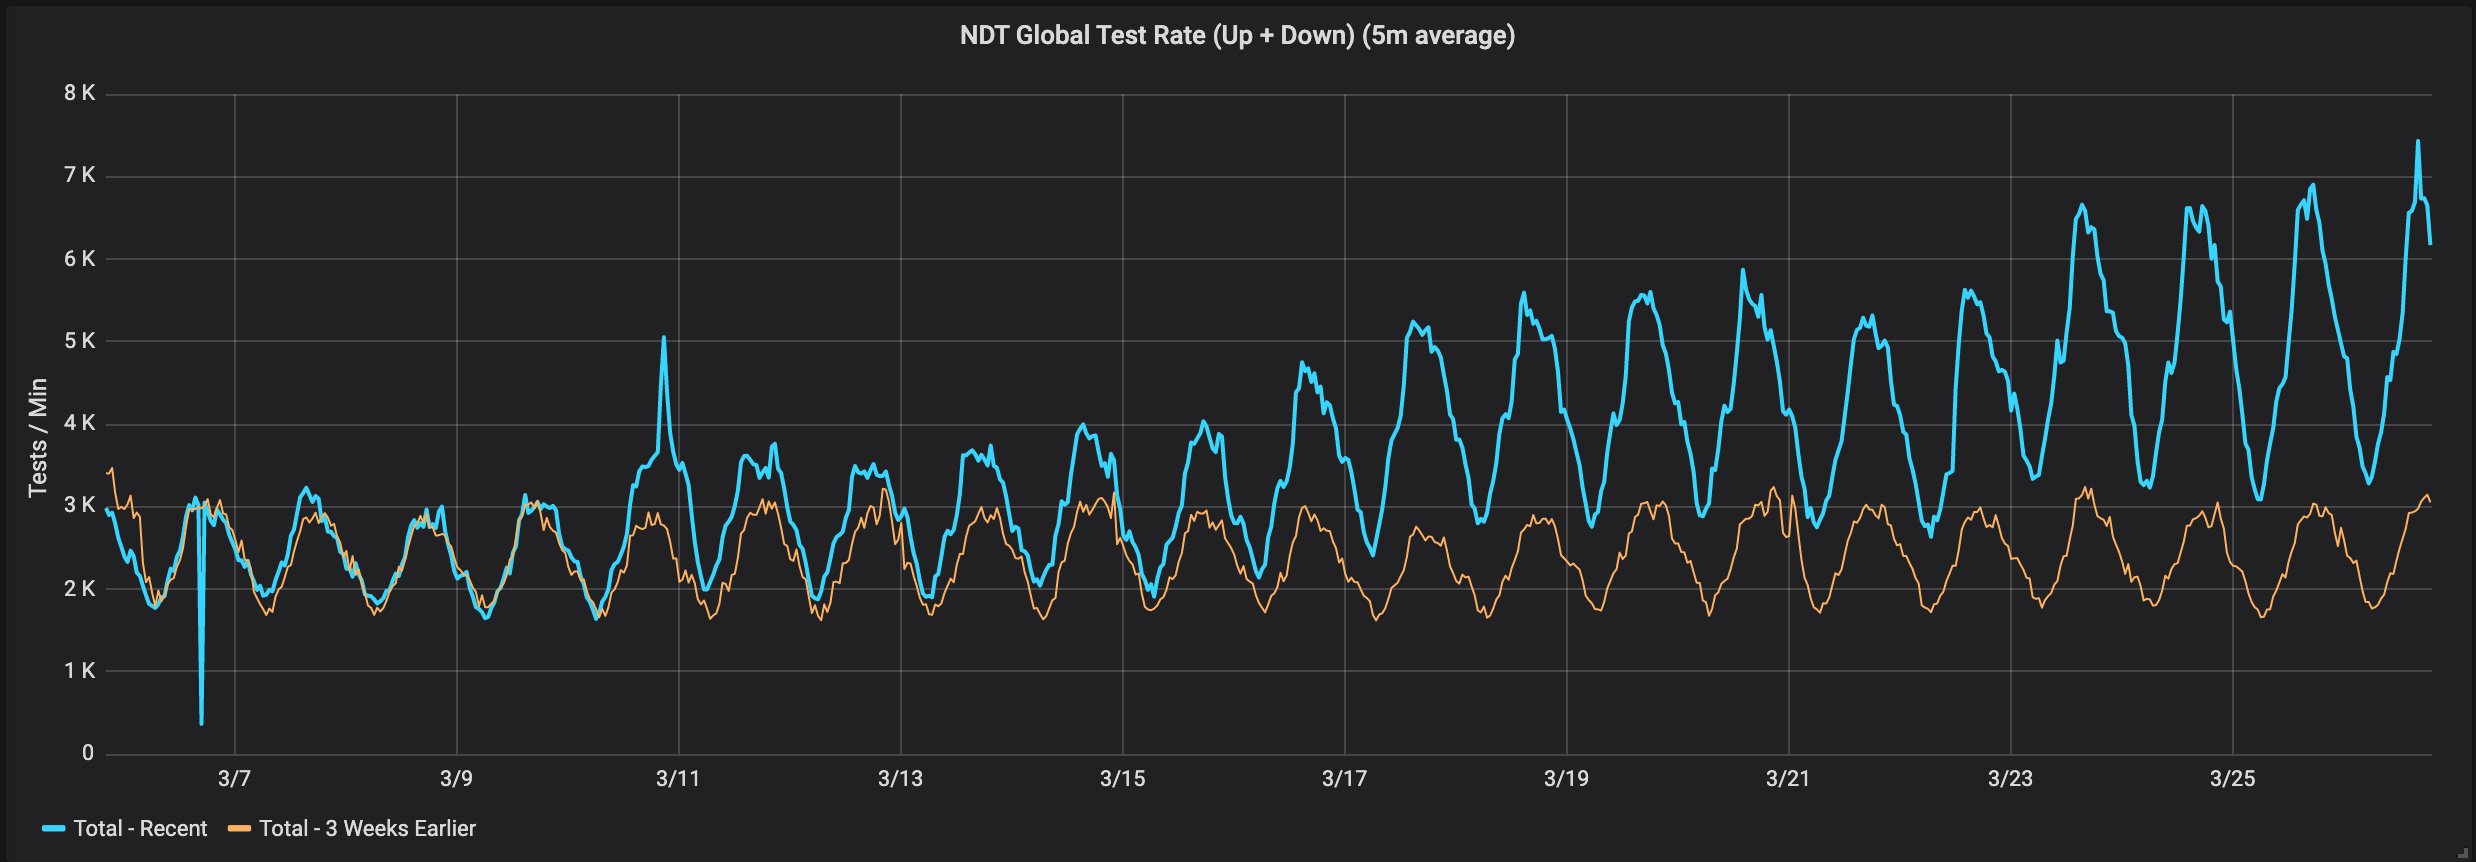 NDT Global Test Rate (tests/min)